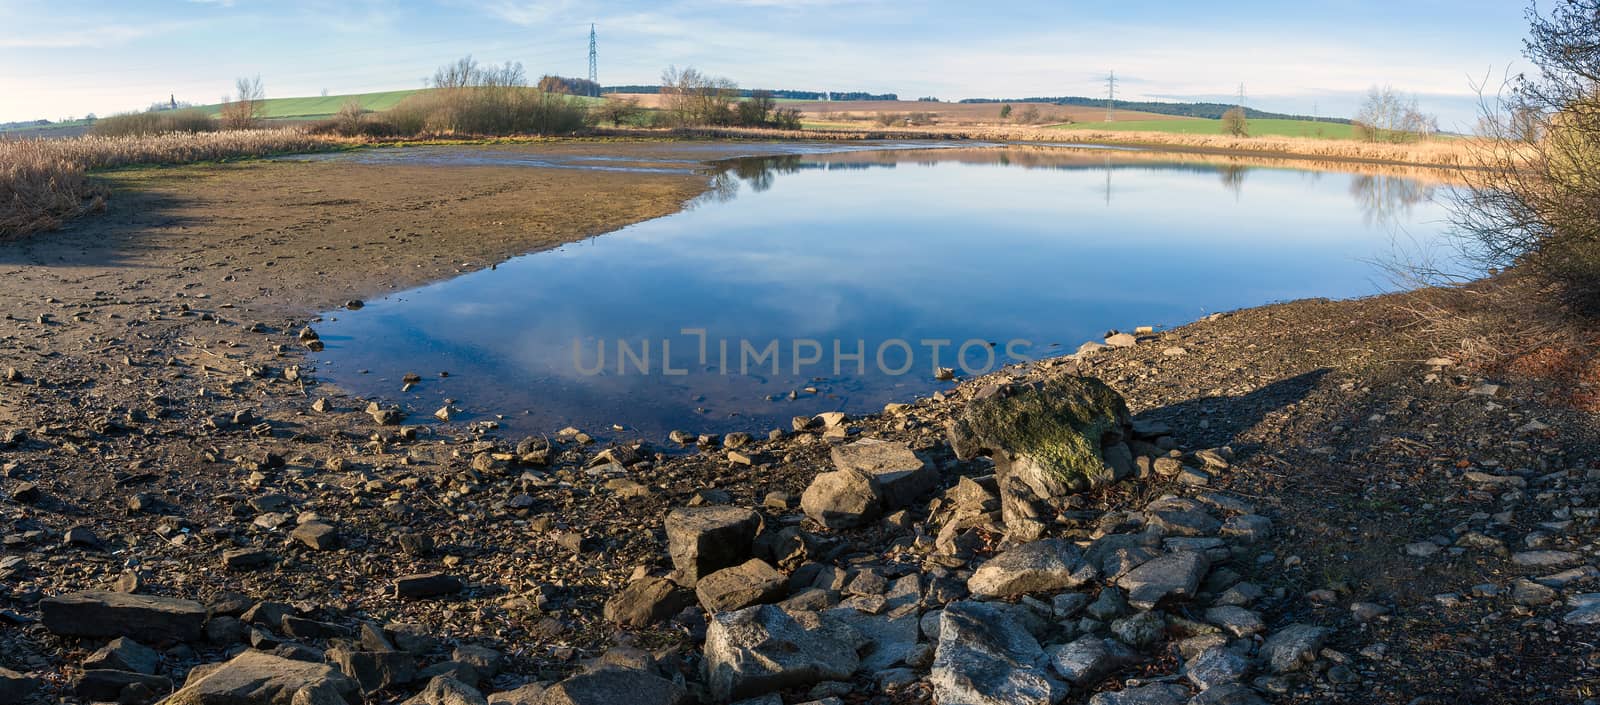 drained pond in winter against blue sky, rural scene, landscape